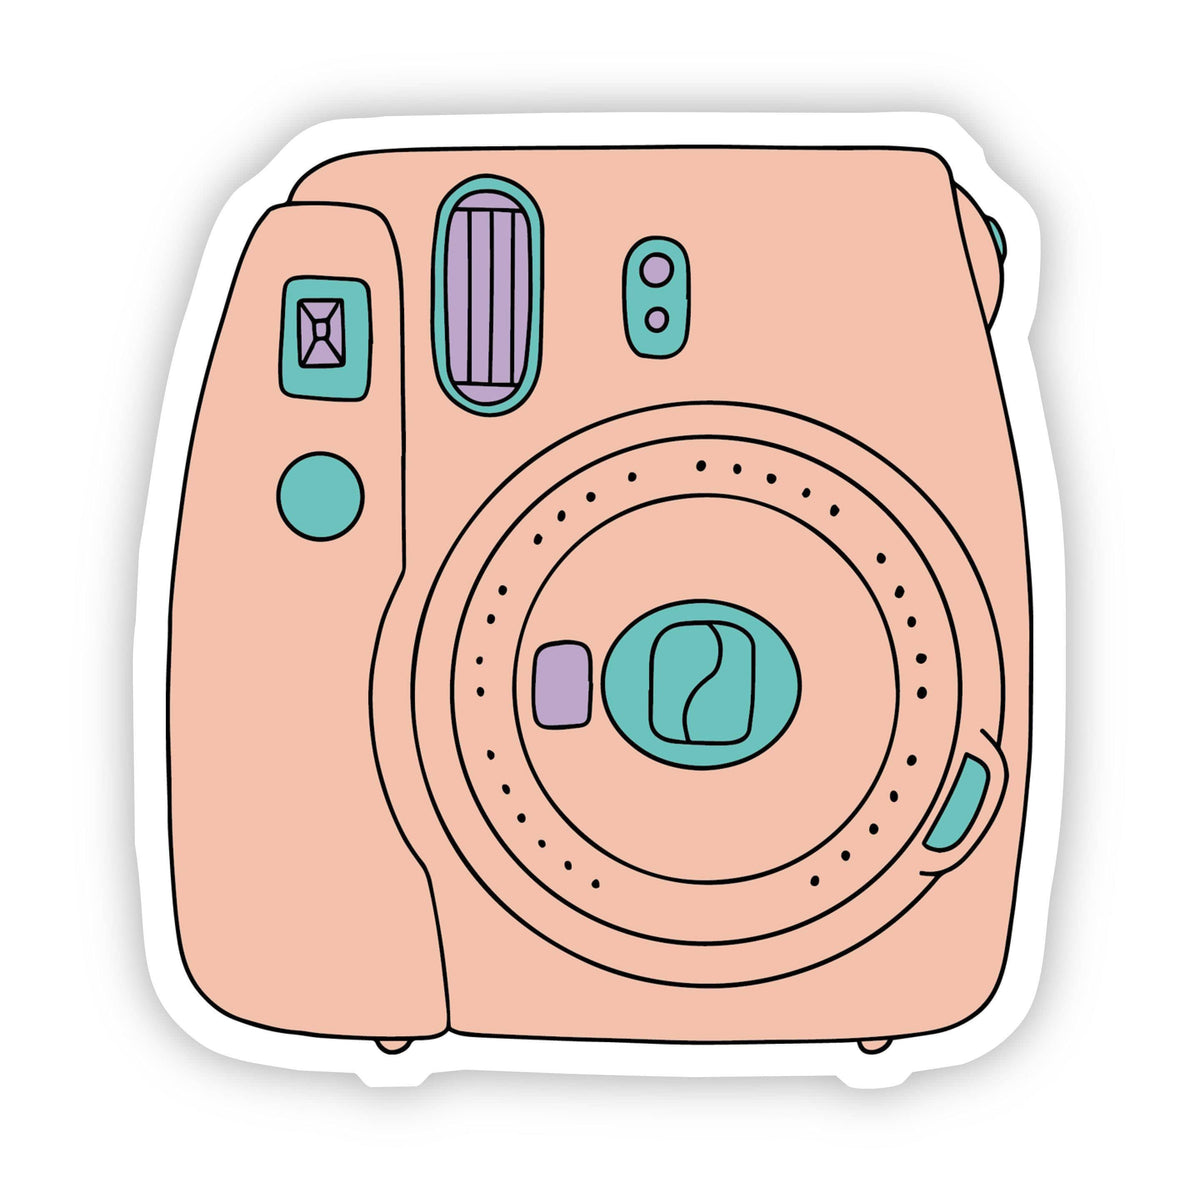 Blue Polaroid Instant Camera Aesthetic Sticker